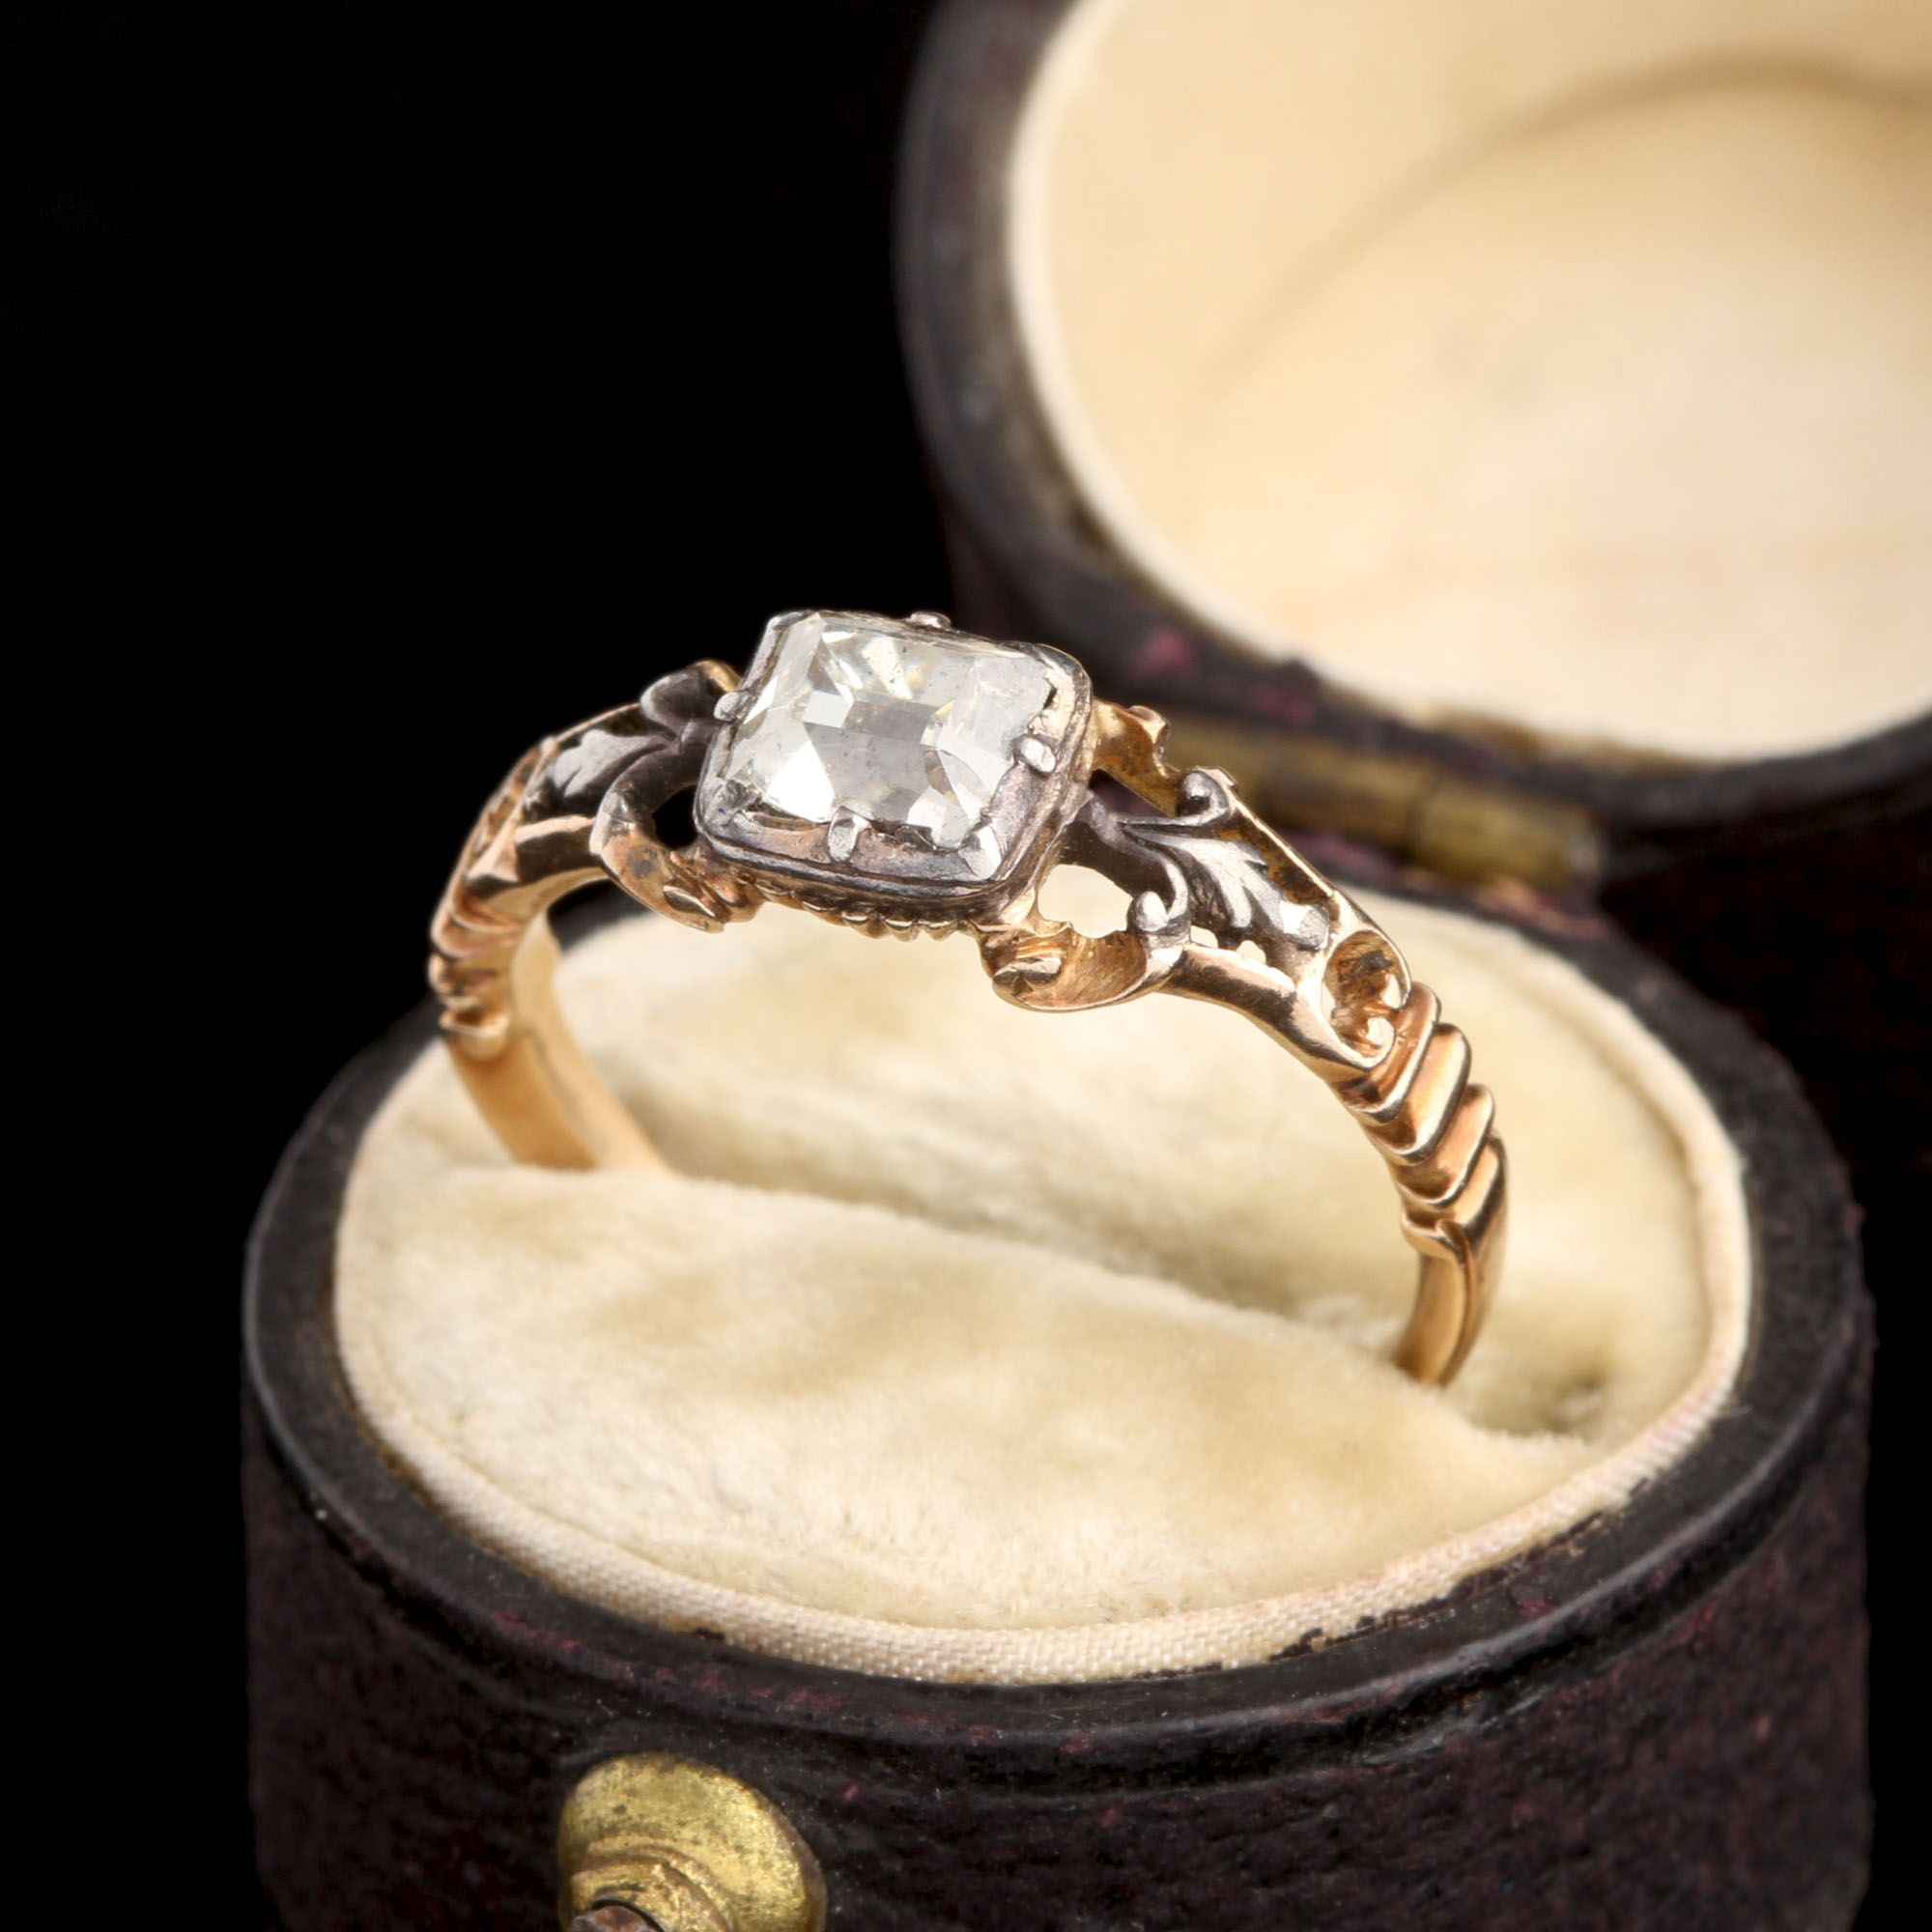 Late 18th Century Table Cut Diamond Ring